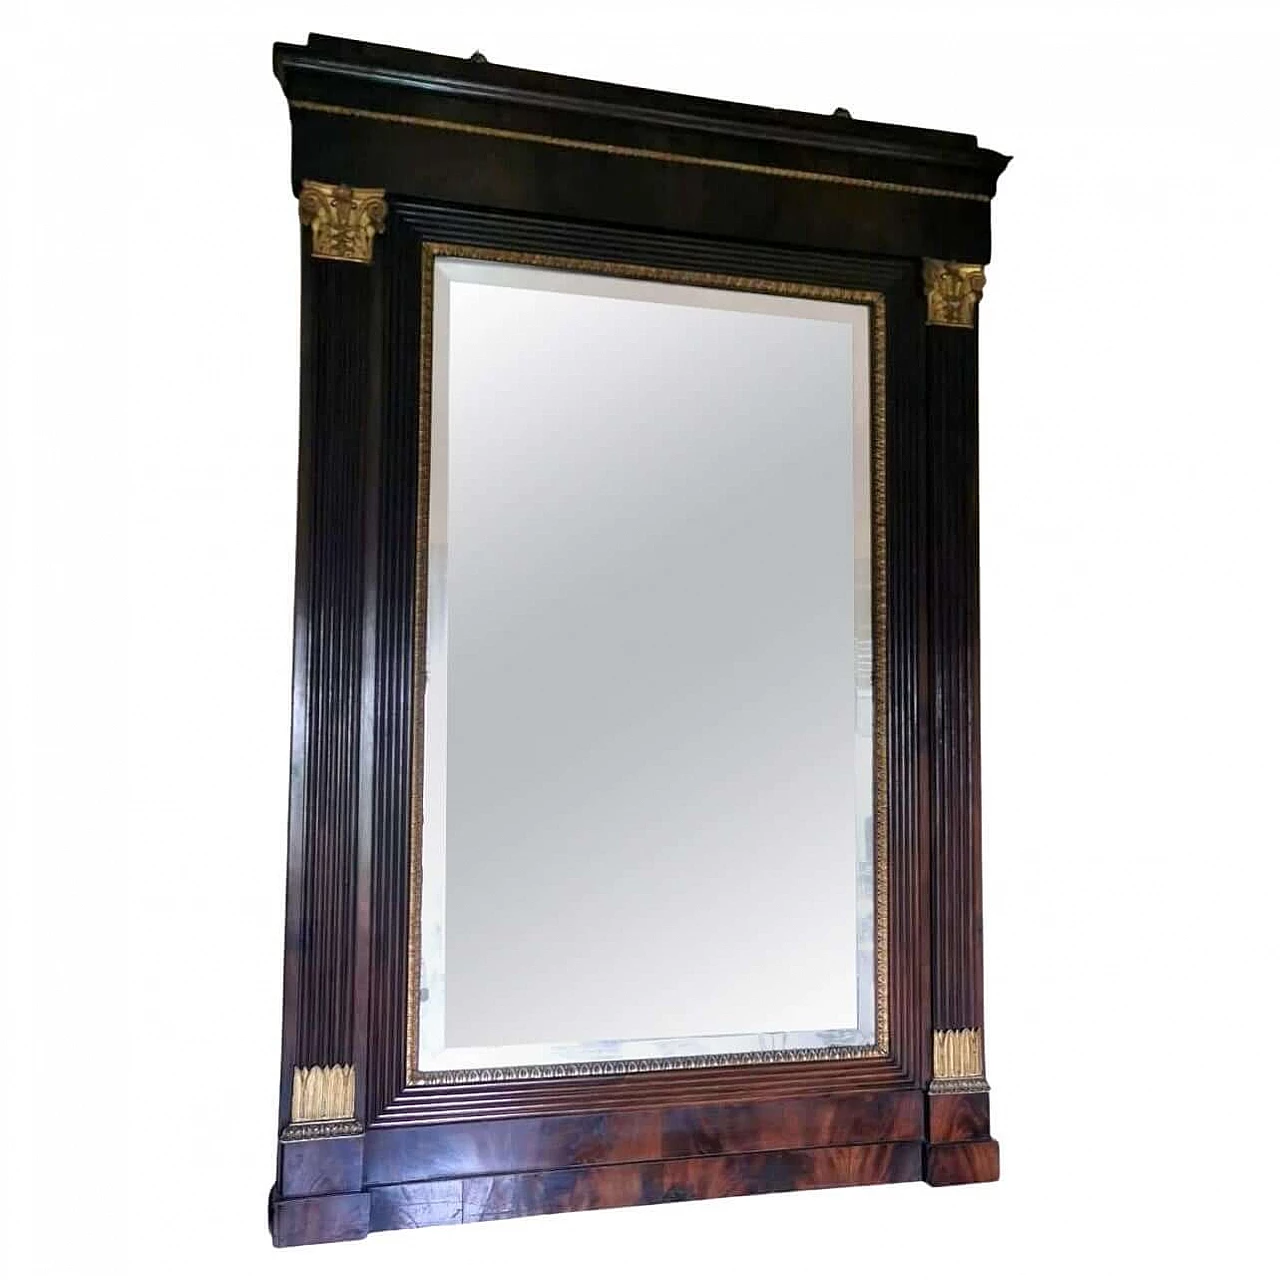 Napoleon III style mirror with wooden frame, 19th century 1